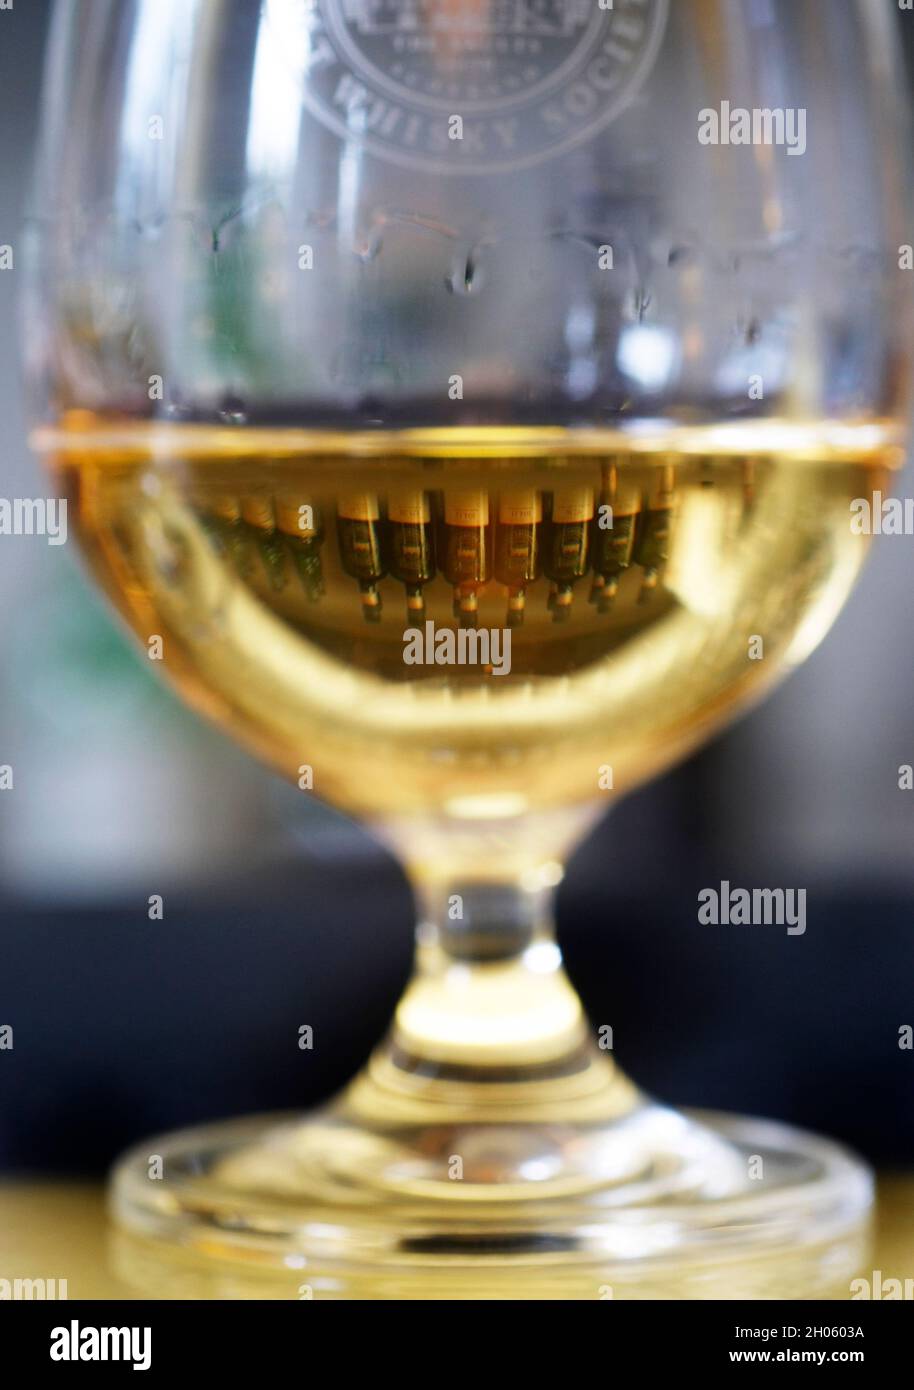 Single Cask Scottish Malt Whisky Stock Photo